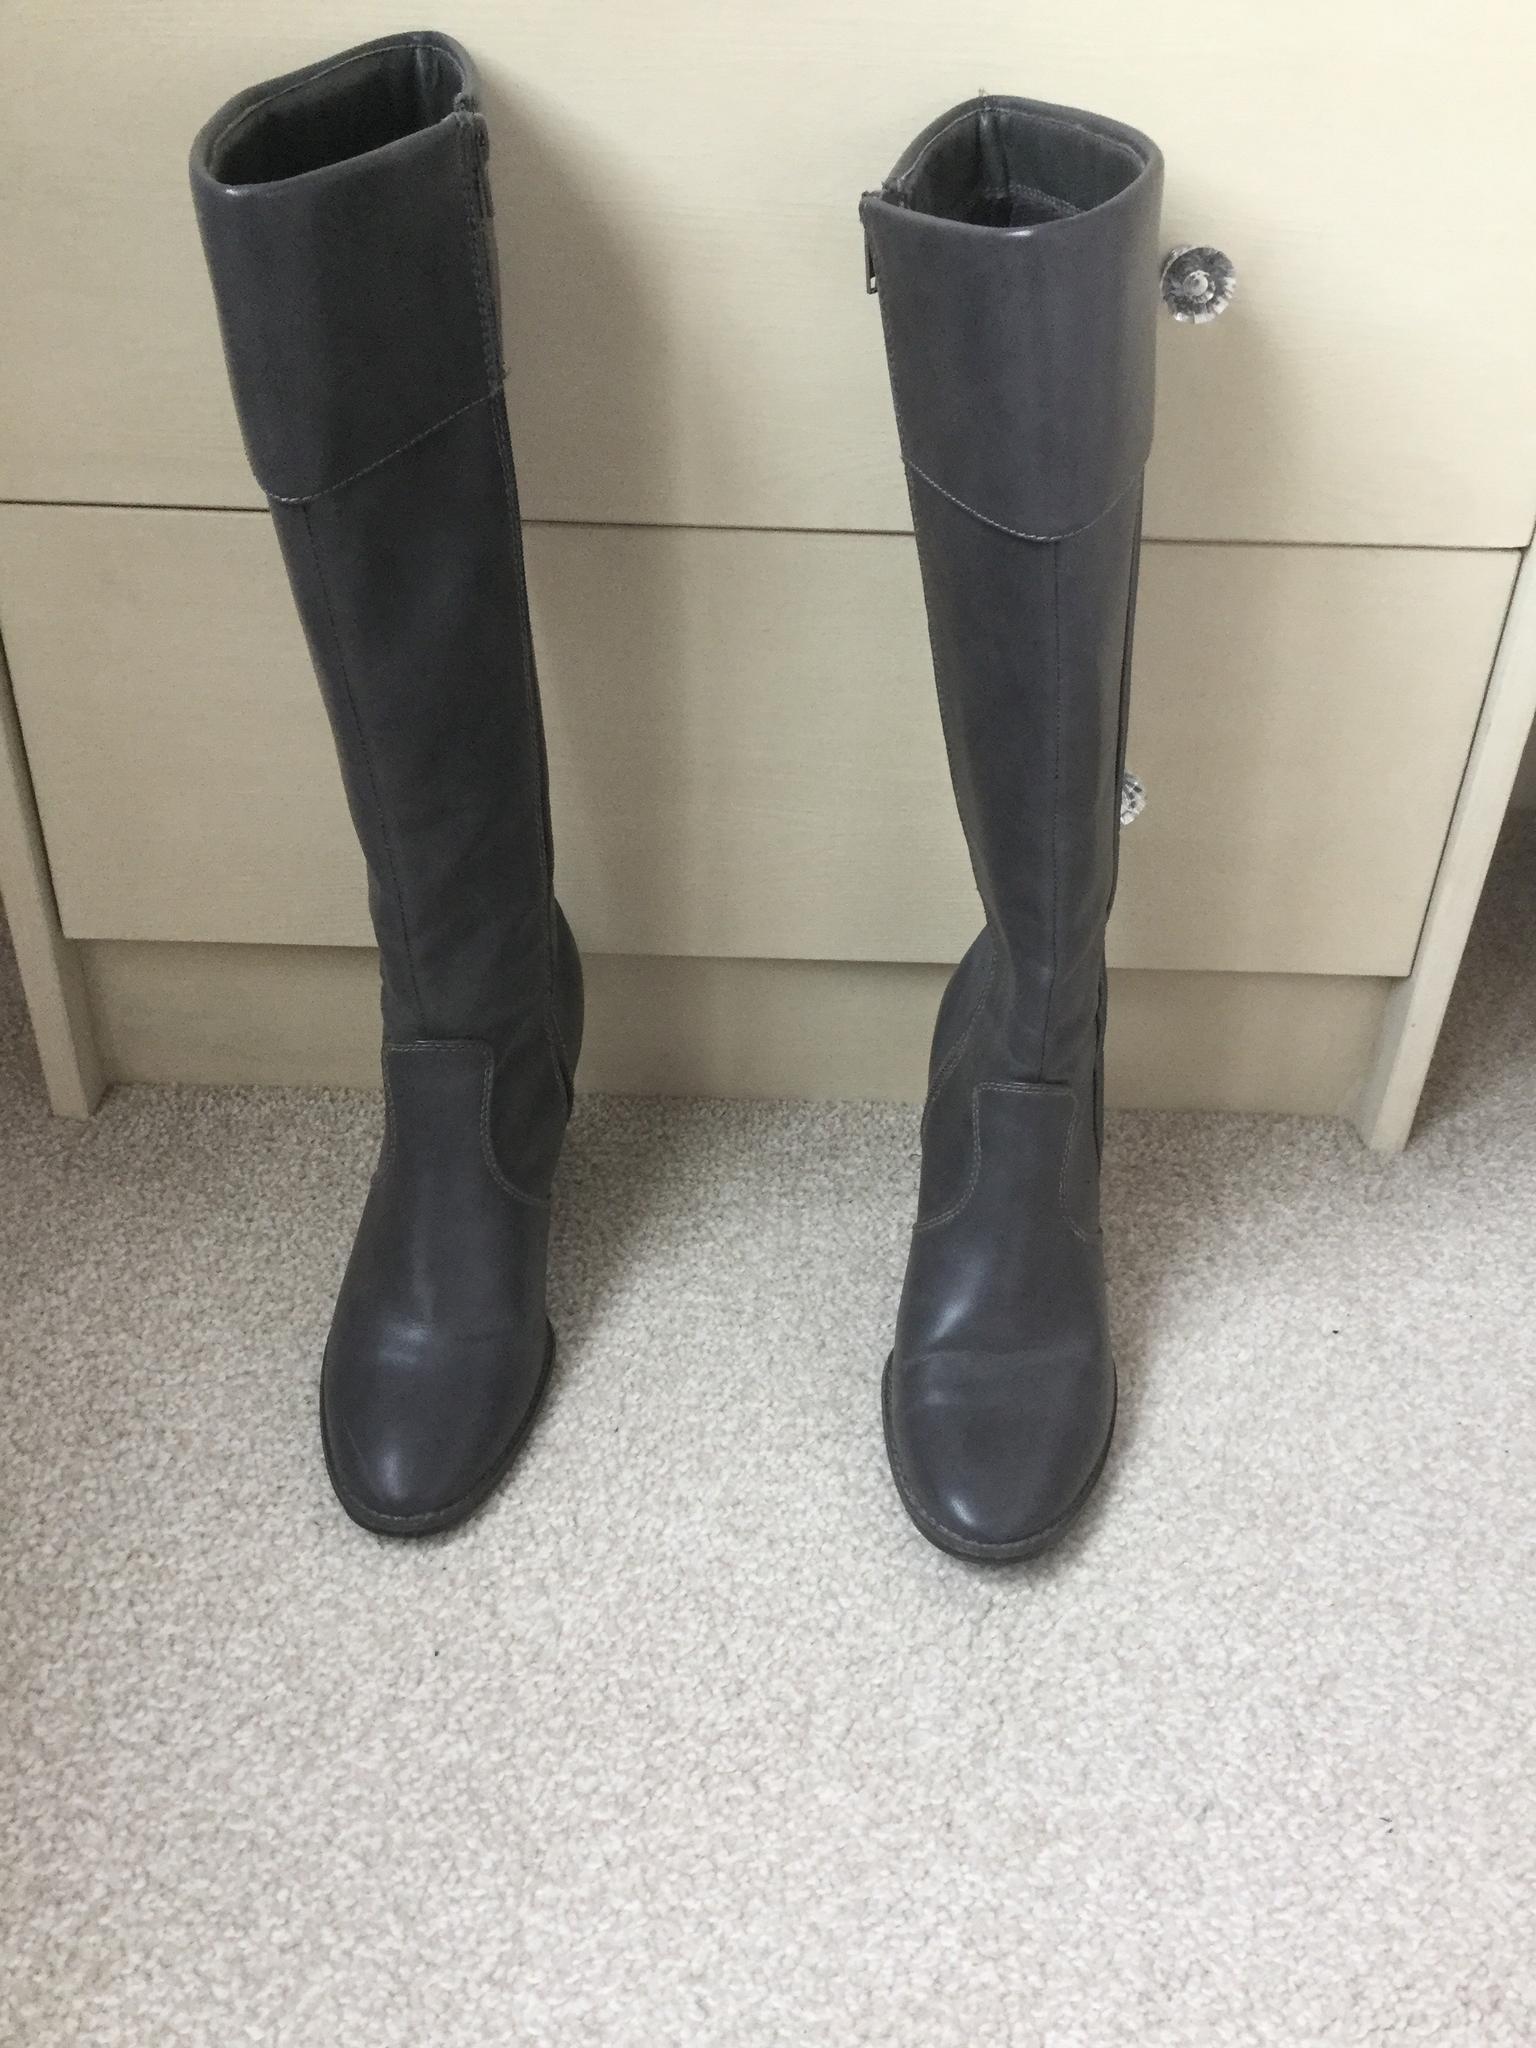 asda ladies knee high boots